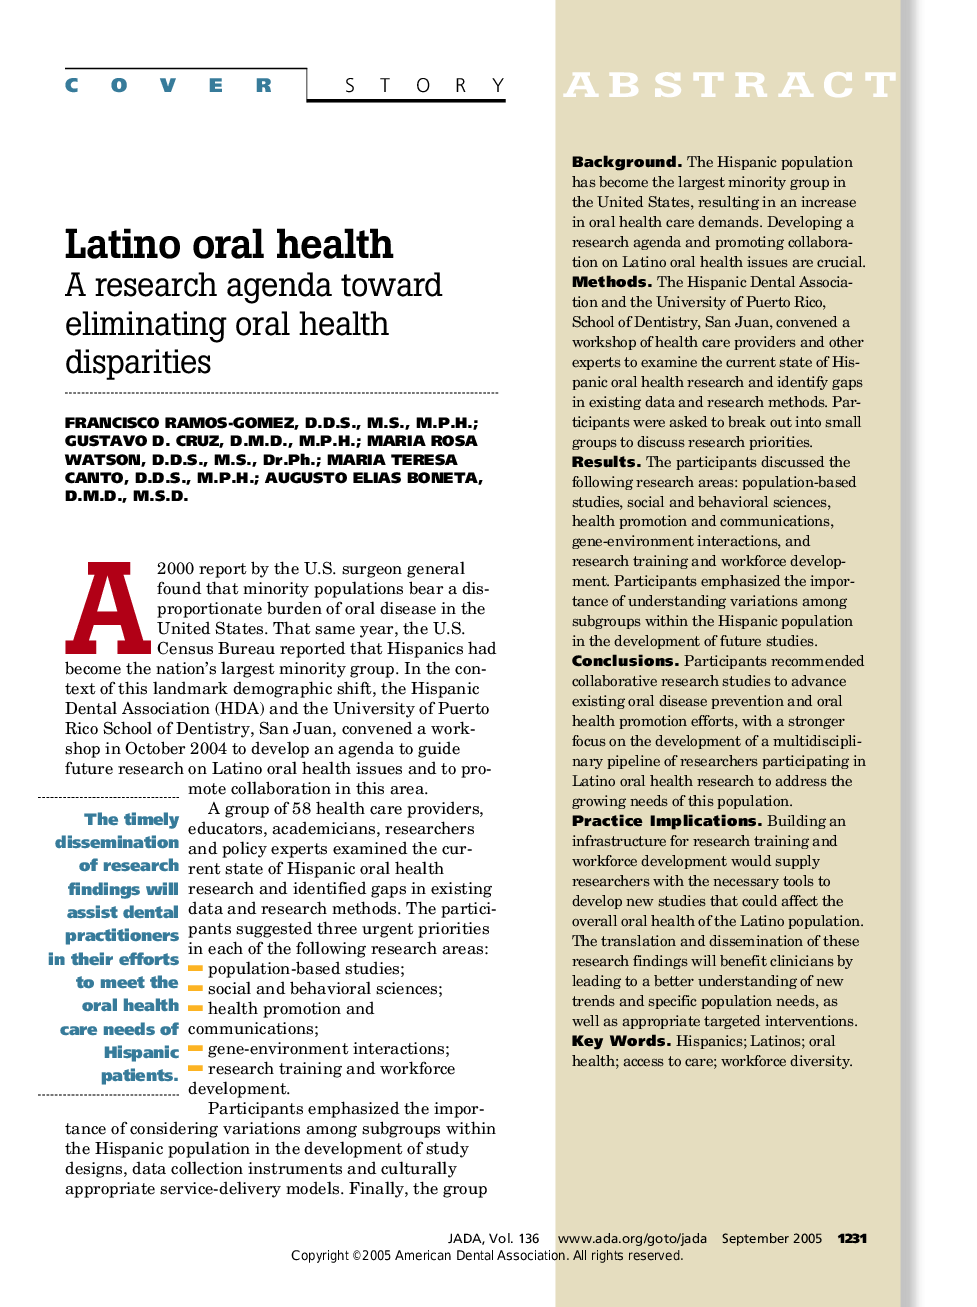 Latino oral health